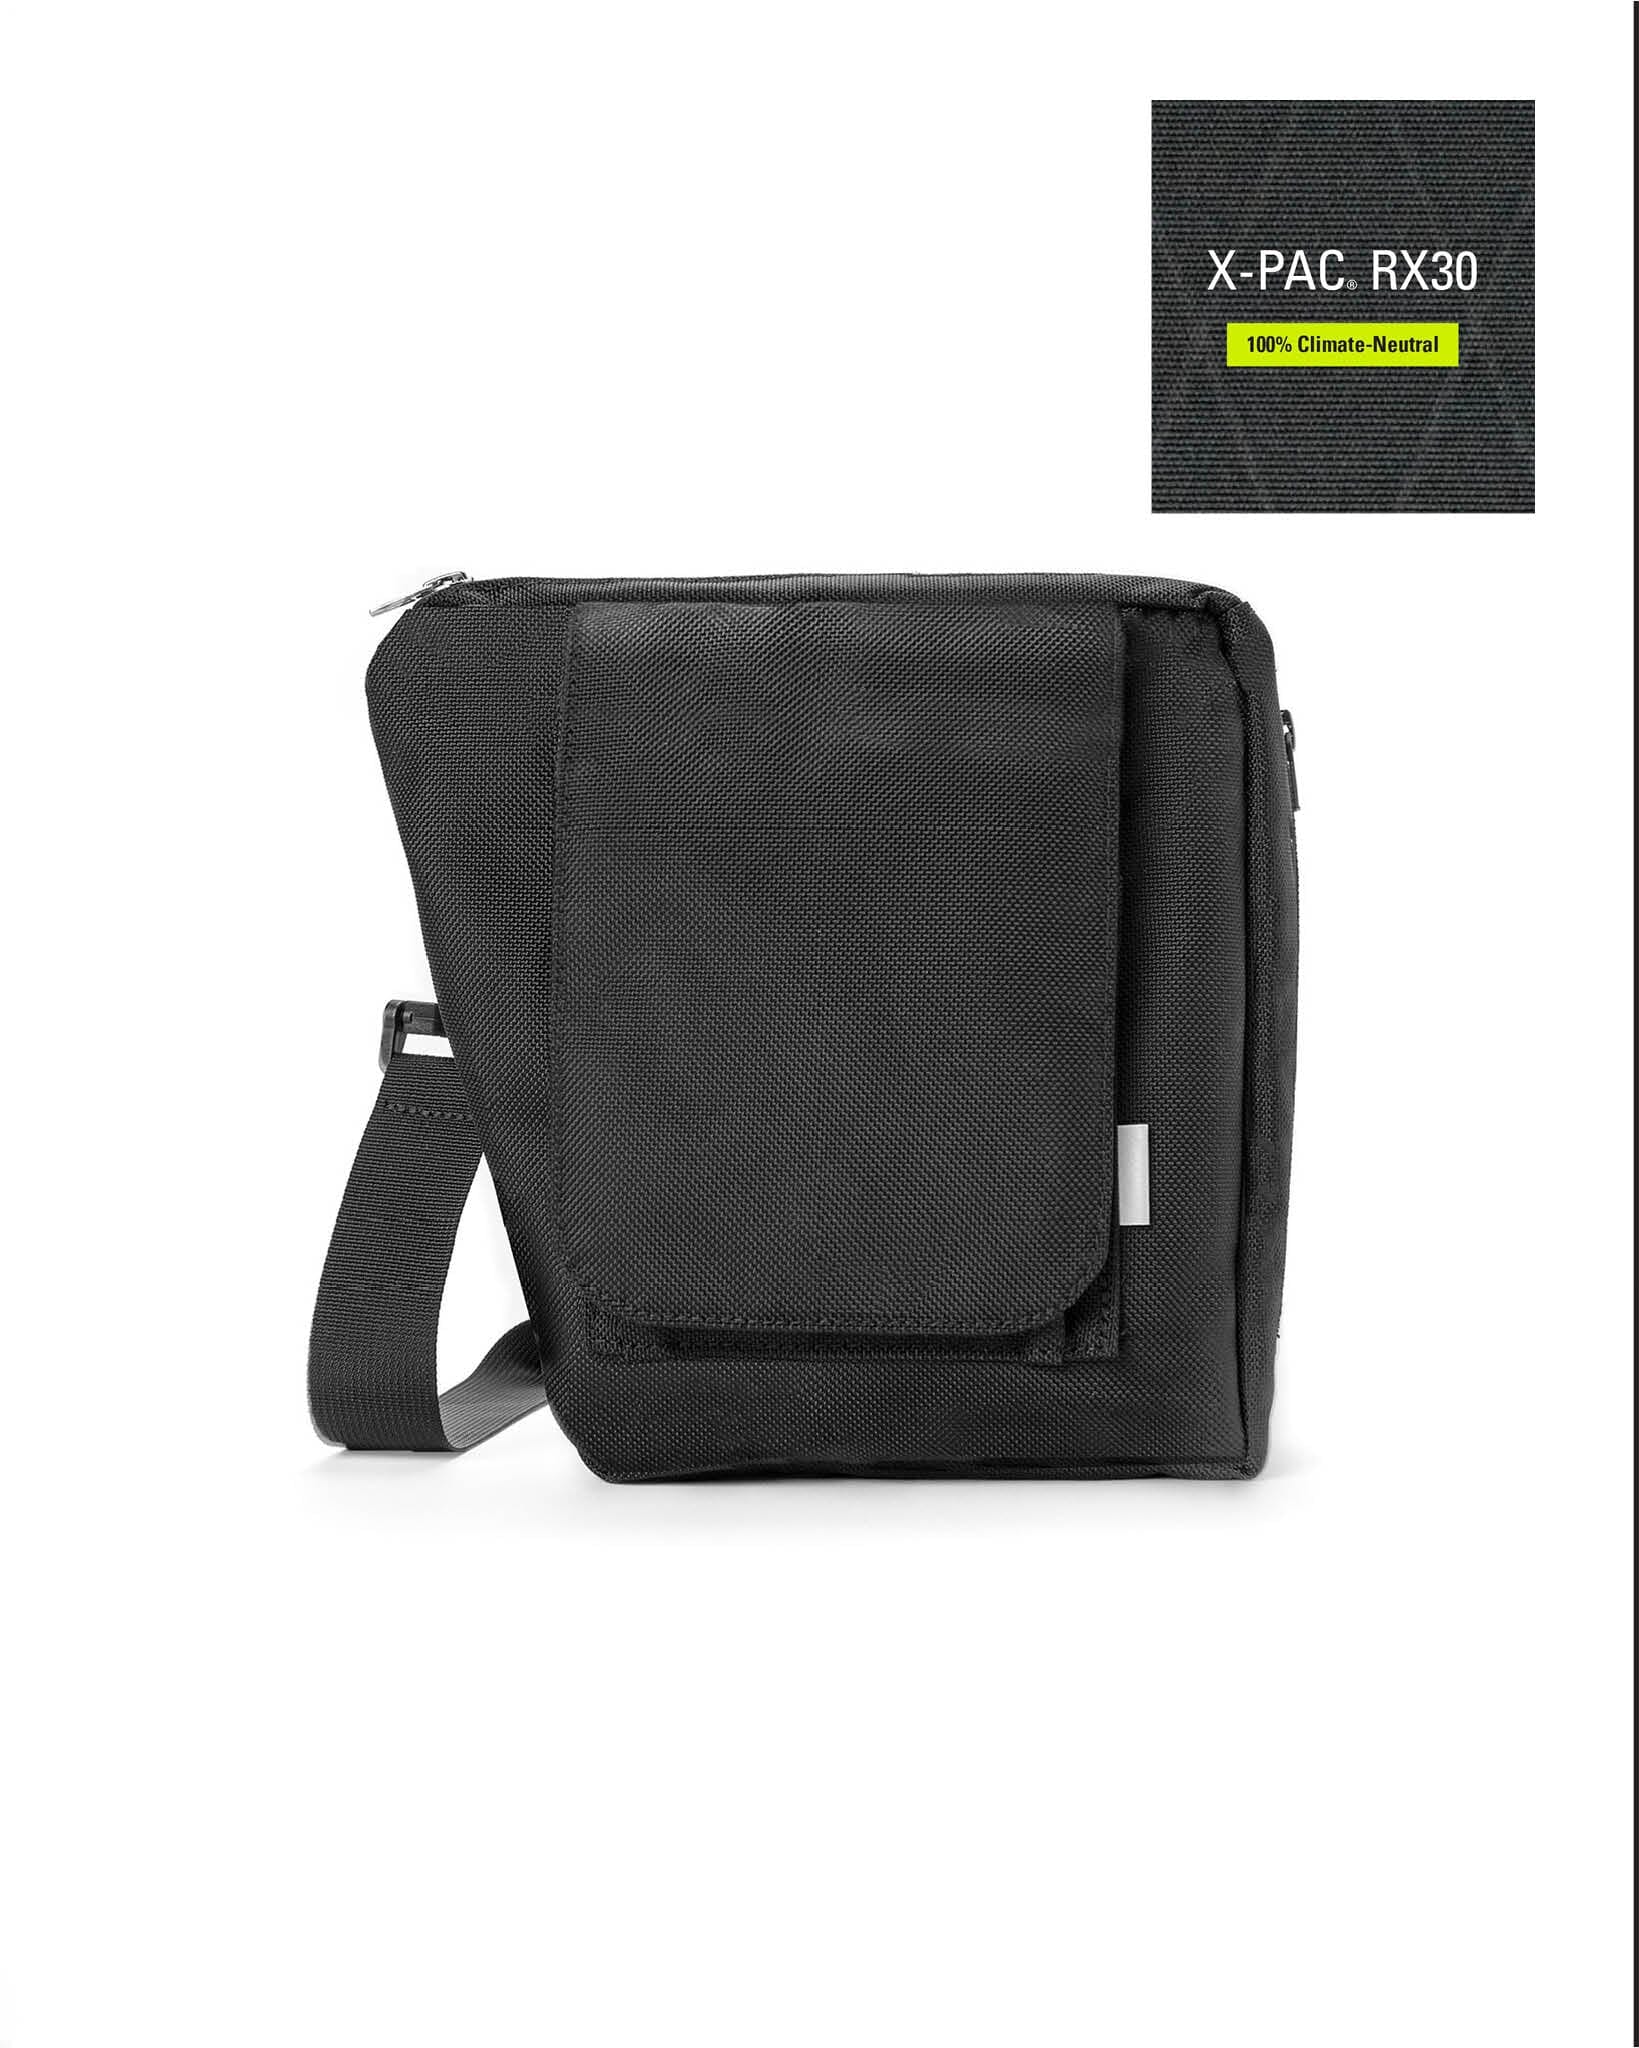 Small Carry - Stealth X-Pac RX30 Bag bolstr Black Righty 